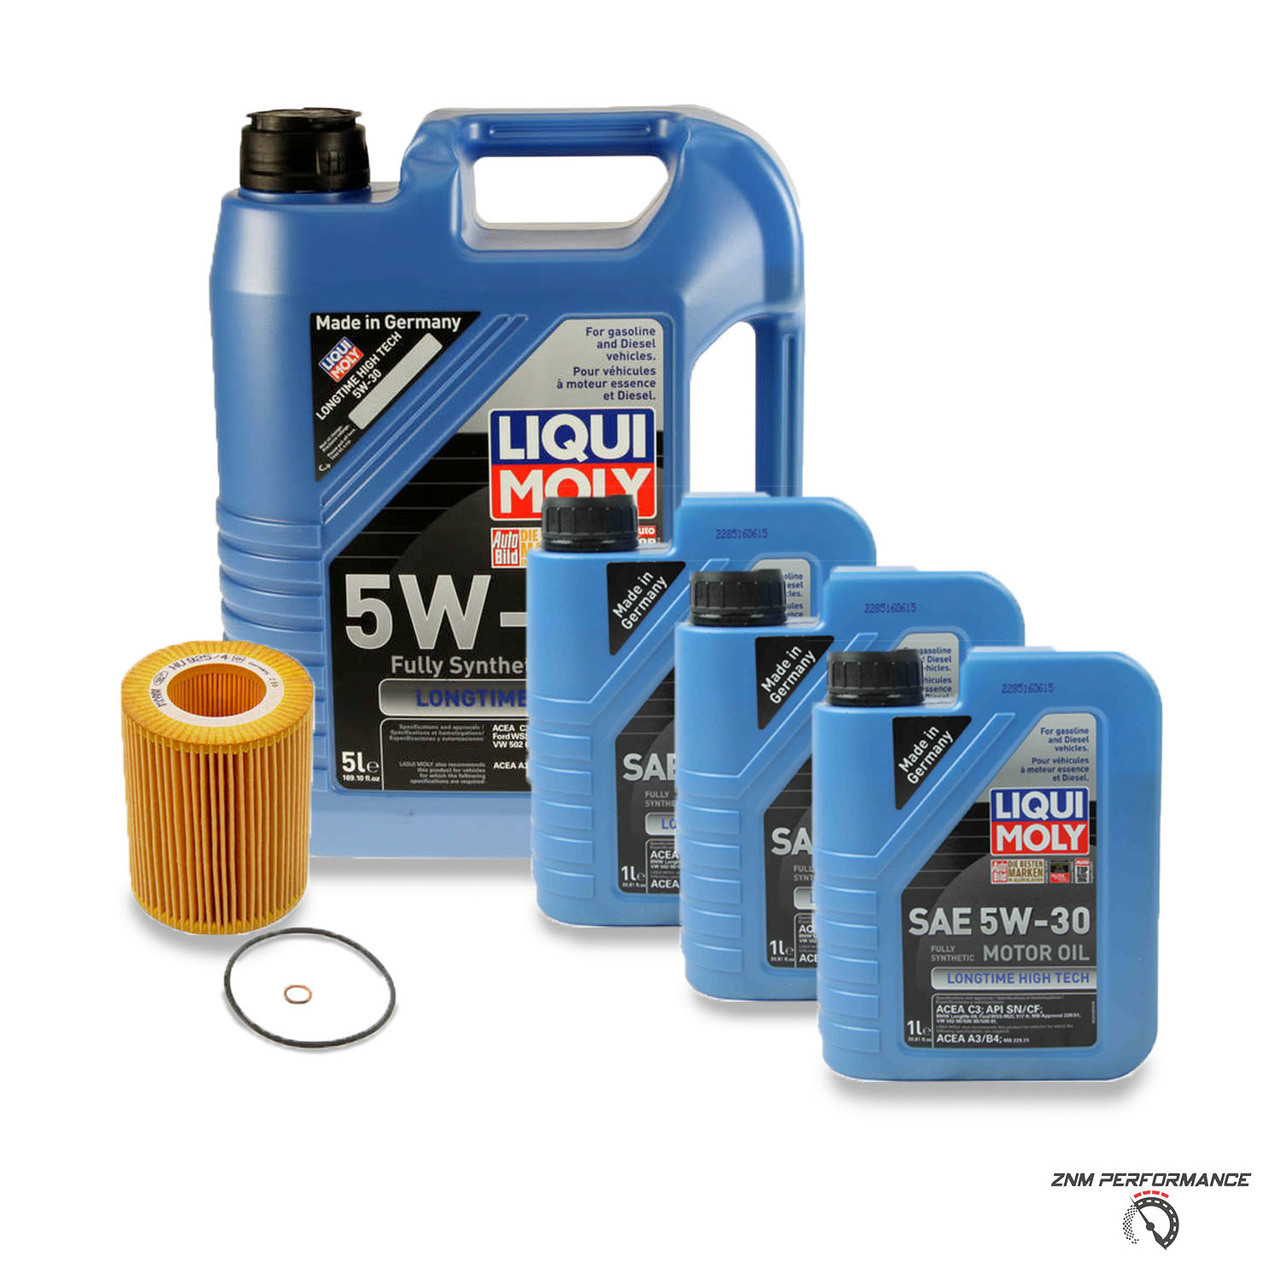 BMW 5W-30 Oil Change Kit - Liqui Moly 11427512300LM.1